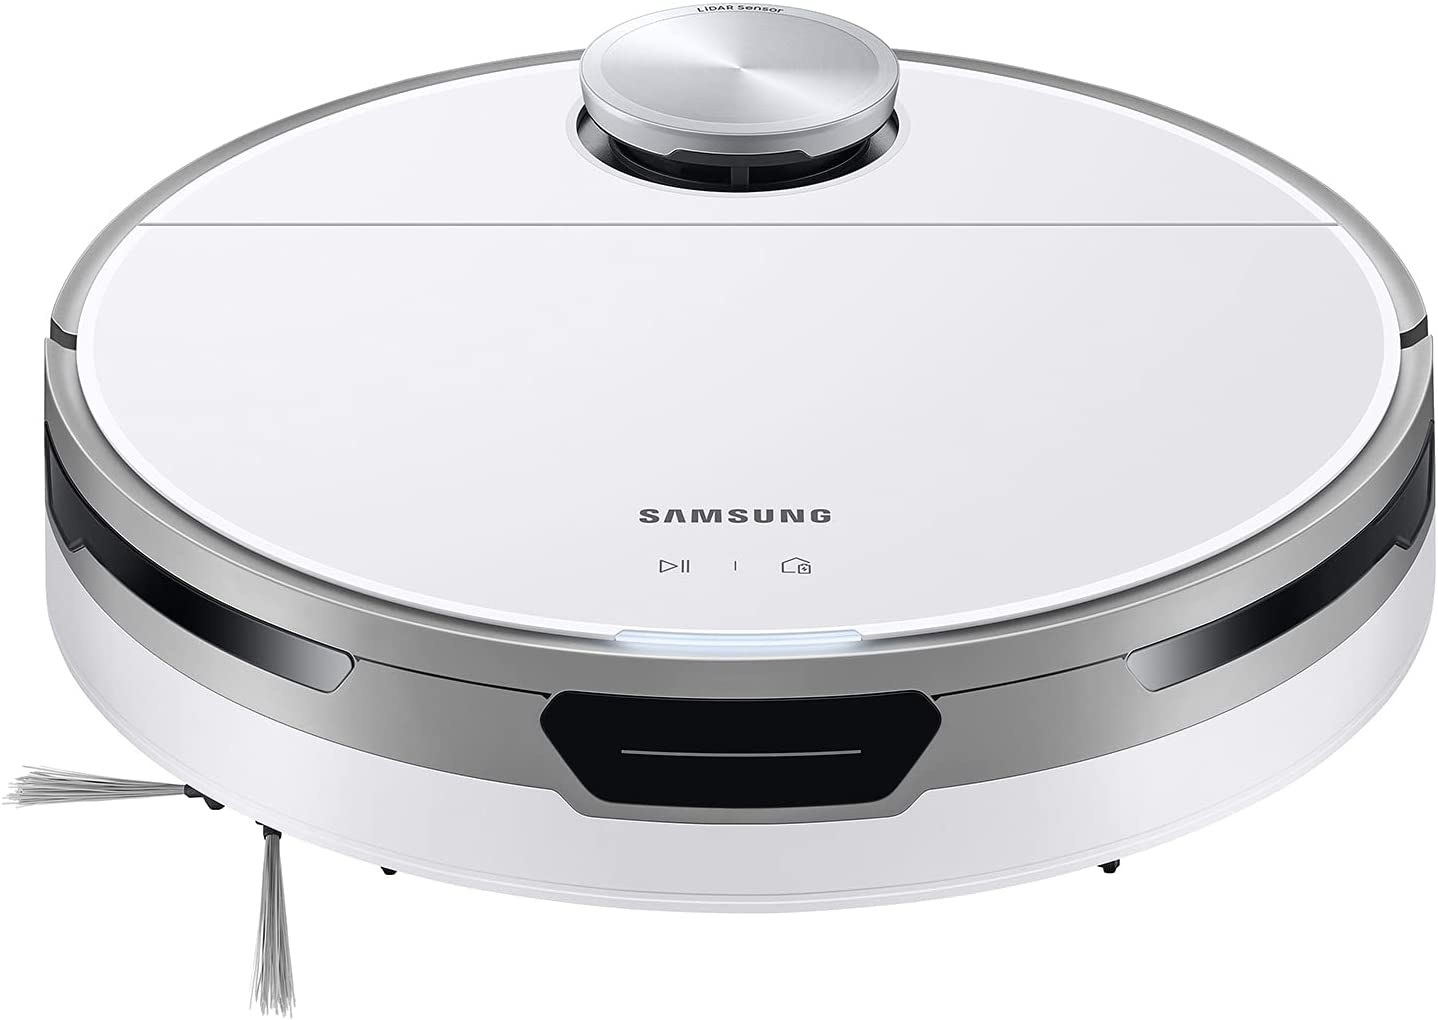 Samsung Jet Bot Robot Cordless Vacuum Cleaner, white on a white background